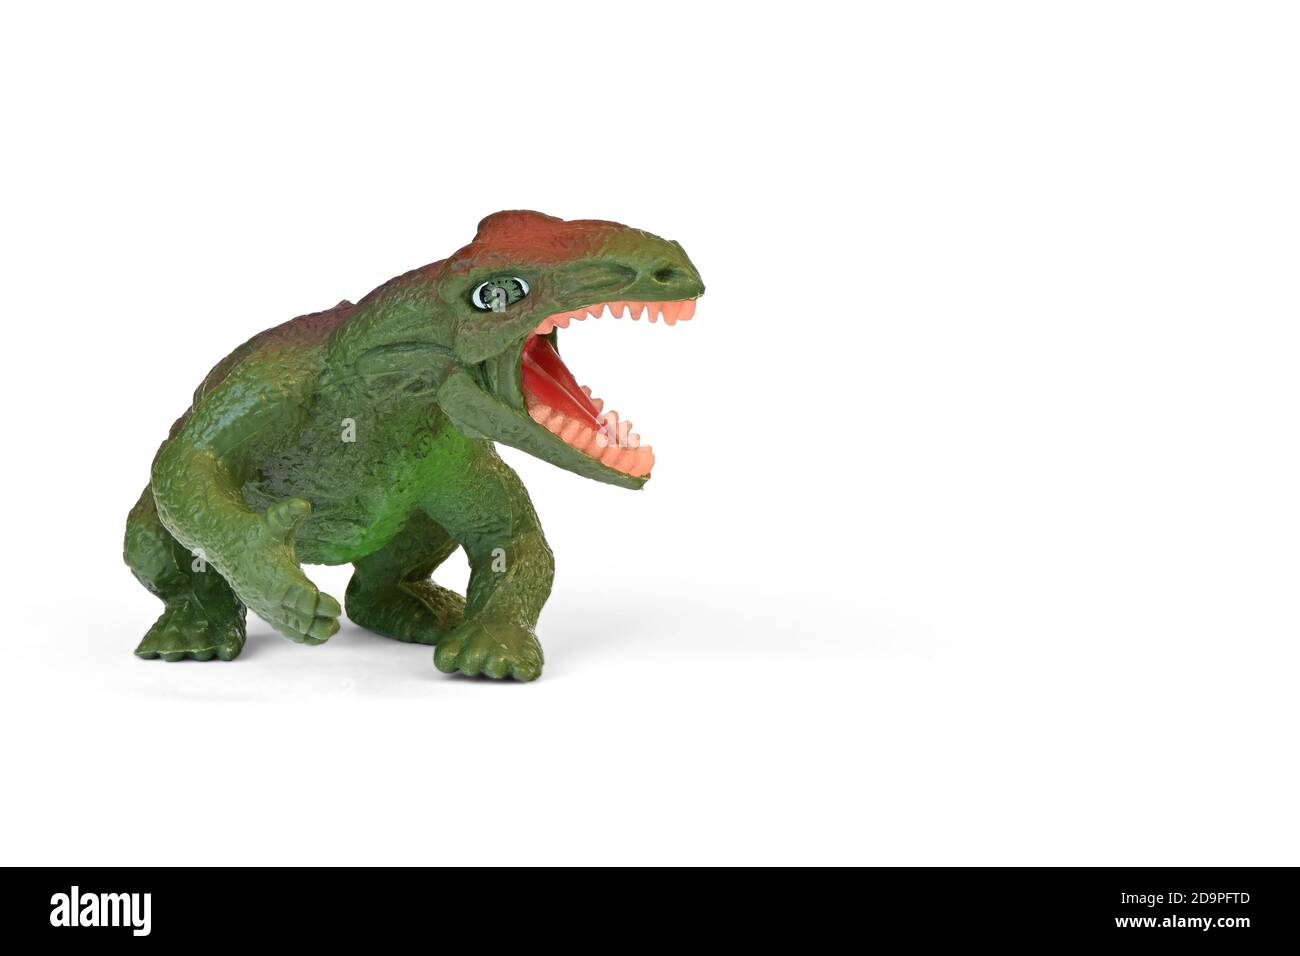 YIJIAOYUN 12 inch Large Plastic Assorted Dinosaur Figure Green Tyrannosaurus Rex 